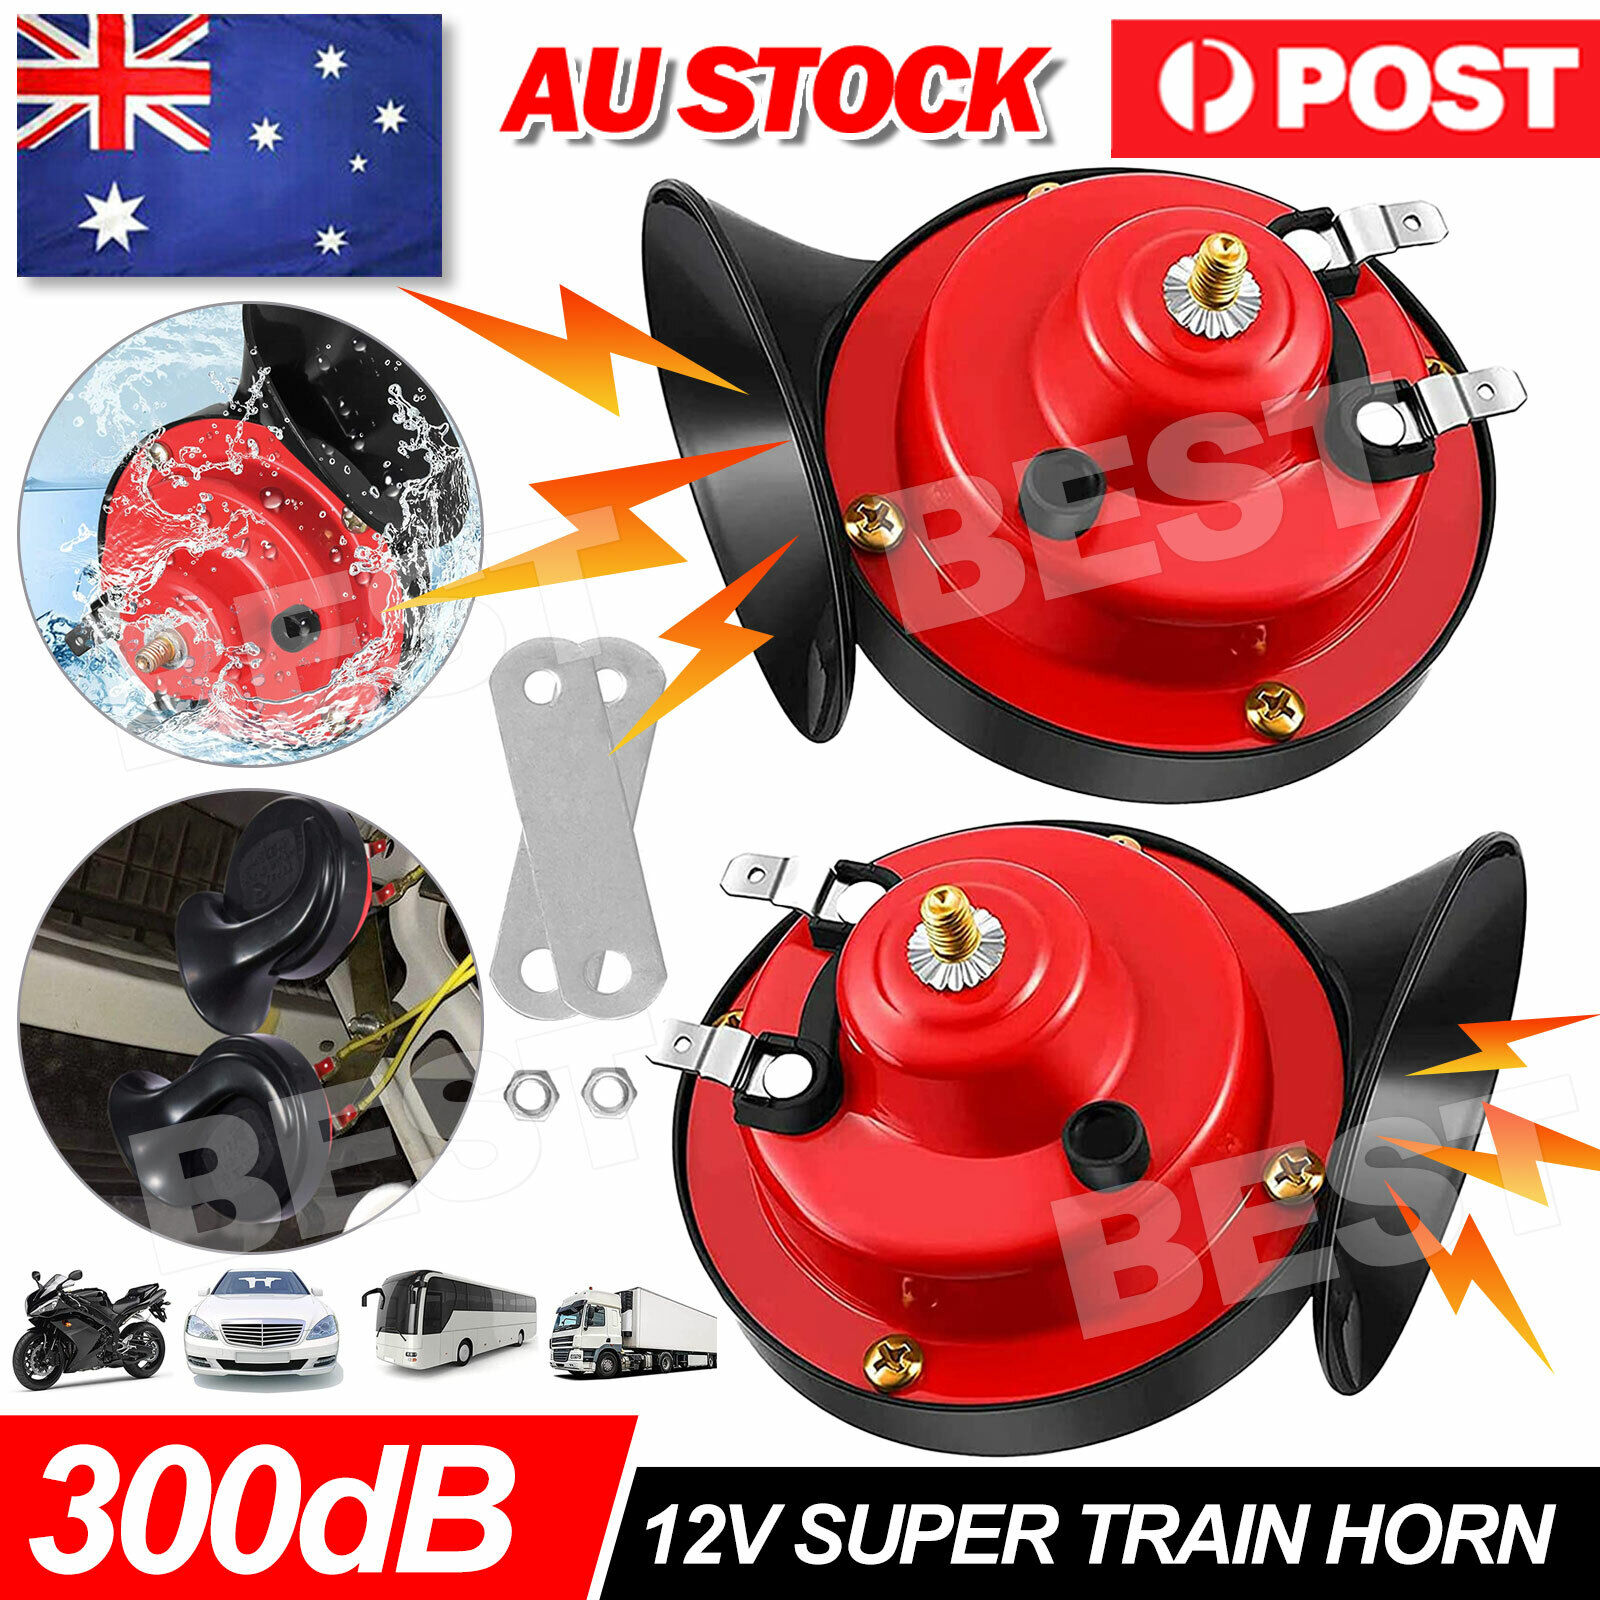 1 Pair 12V 300DB Super Train Horn For Trucks SUV Car Boat Motorcycles Universal